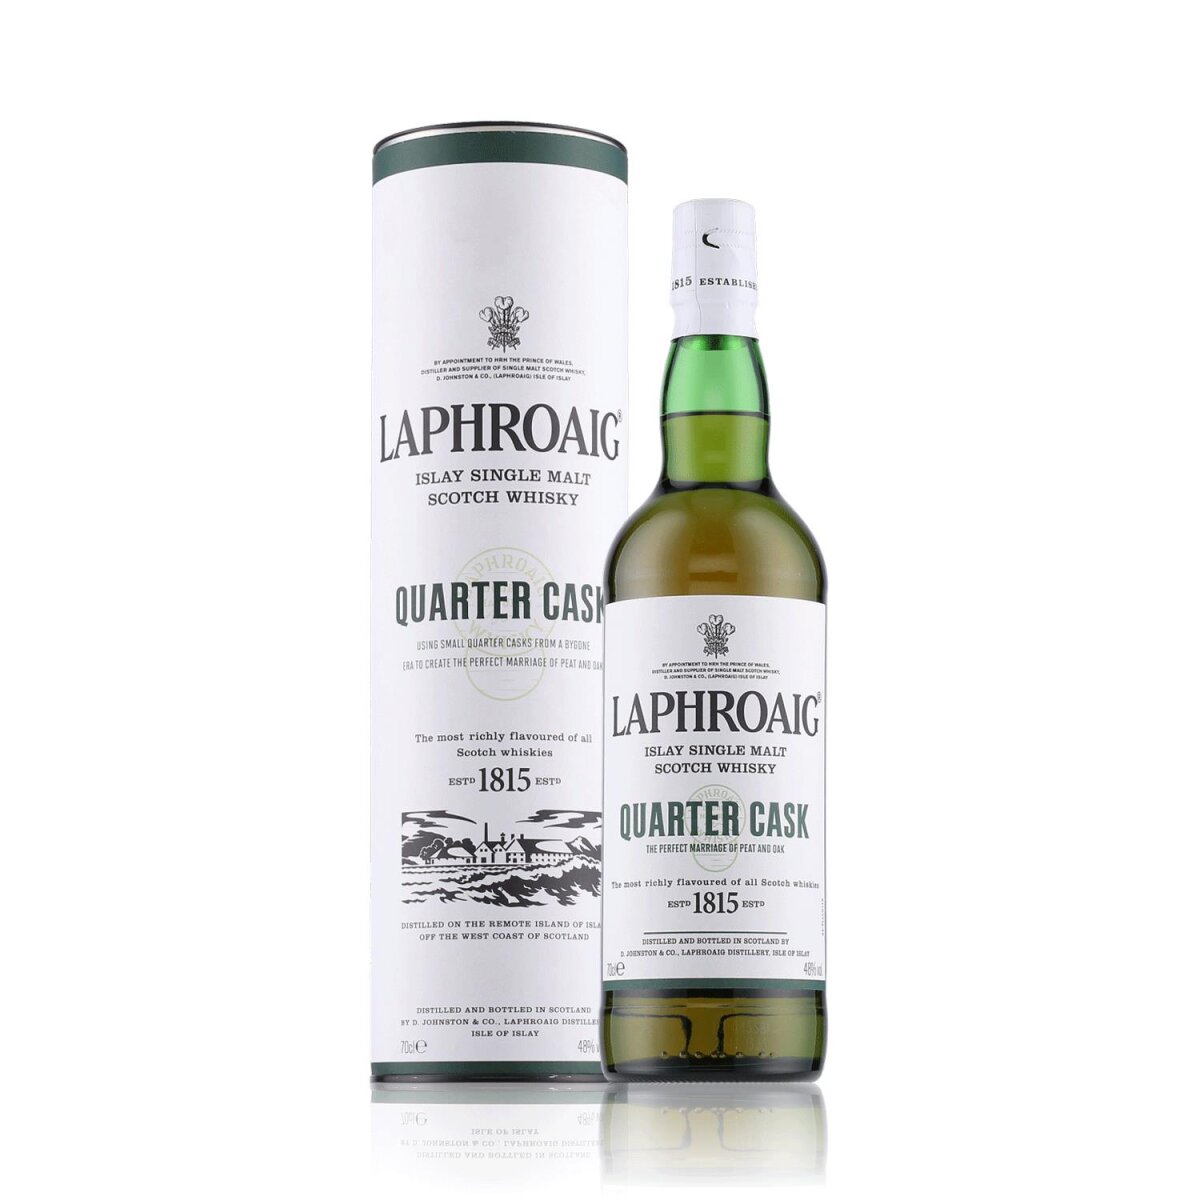 Laphroaig Quarter Cask Whisky 48% Vol. 0,7l in Geschenkbox, 38,69 €